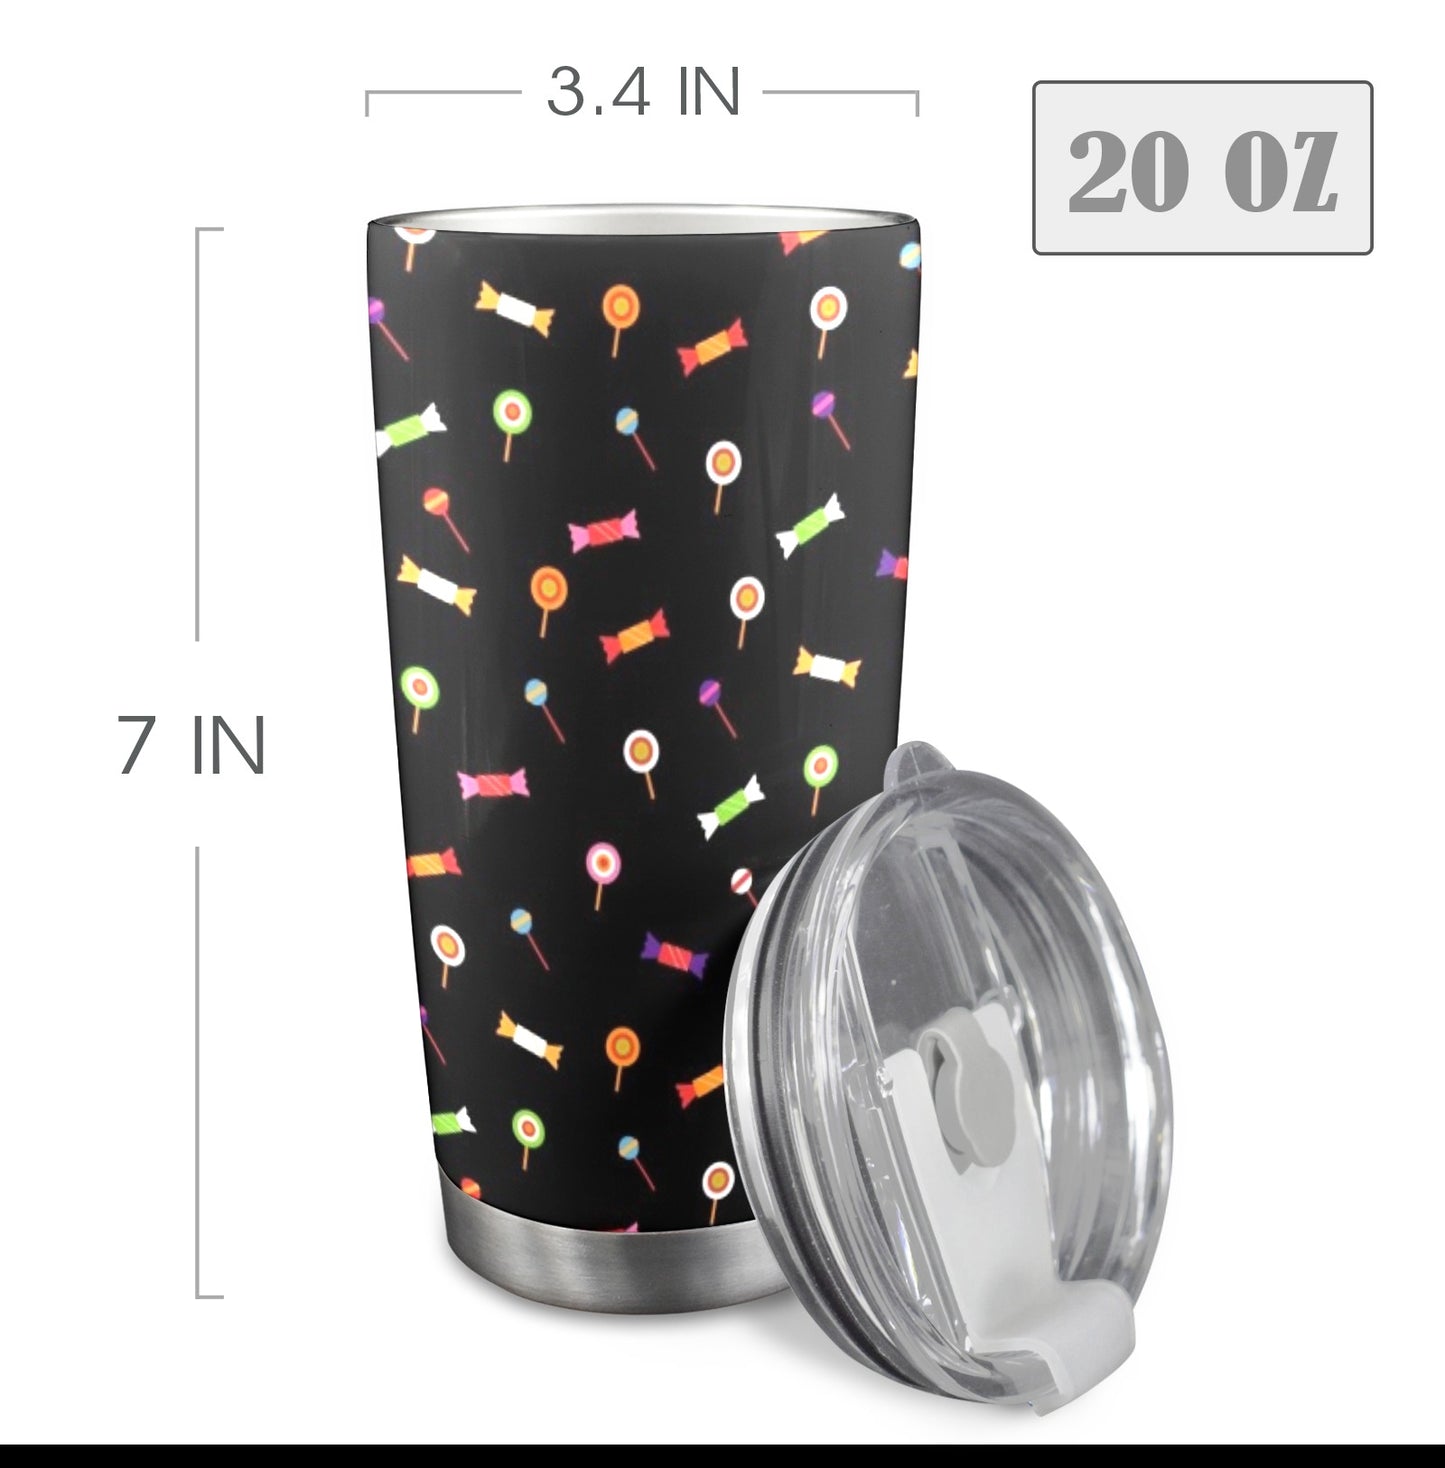 Candy - 20oz Travel Mug with Clear Lid Clear Lid Travel Mug Food